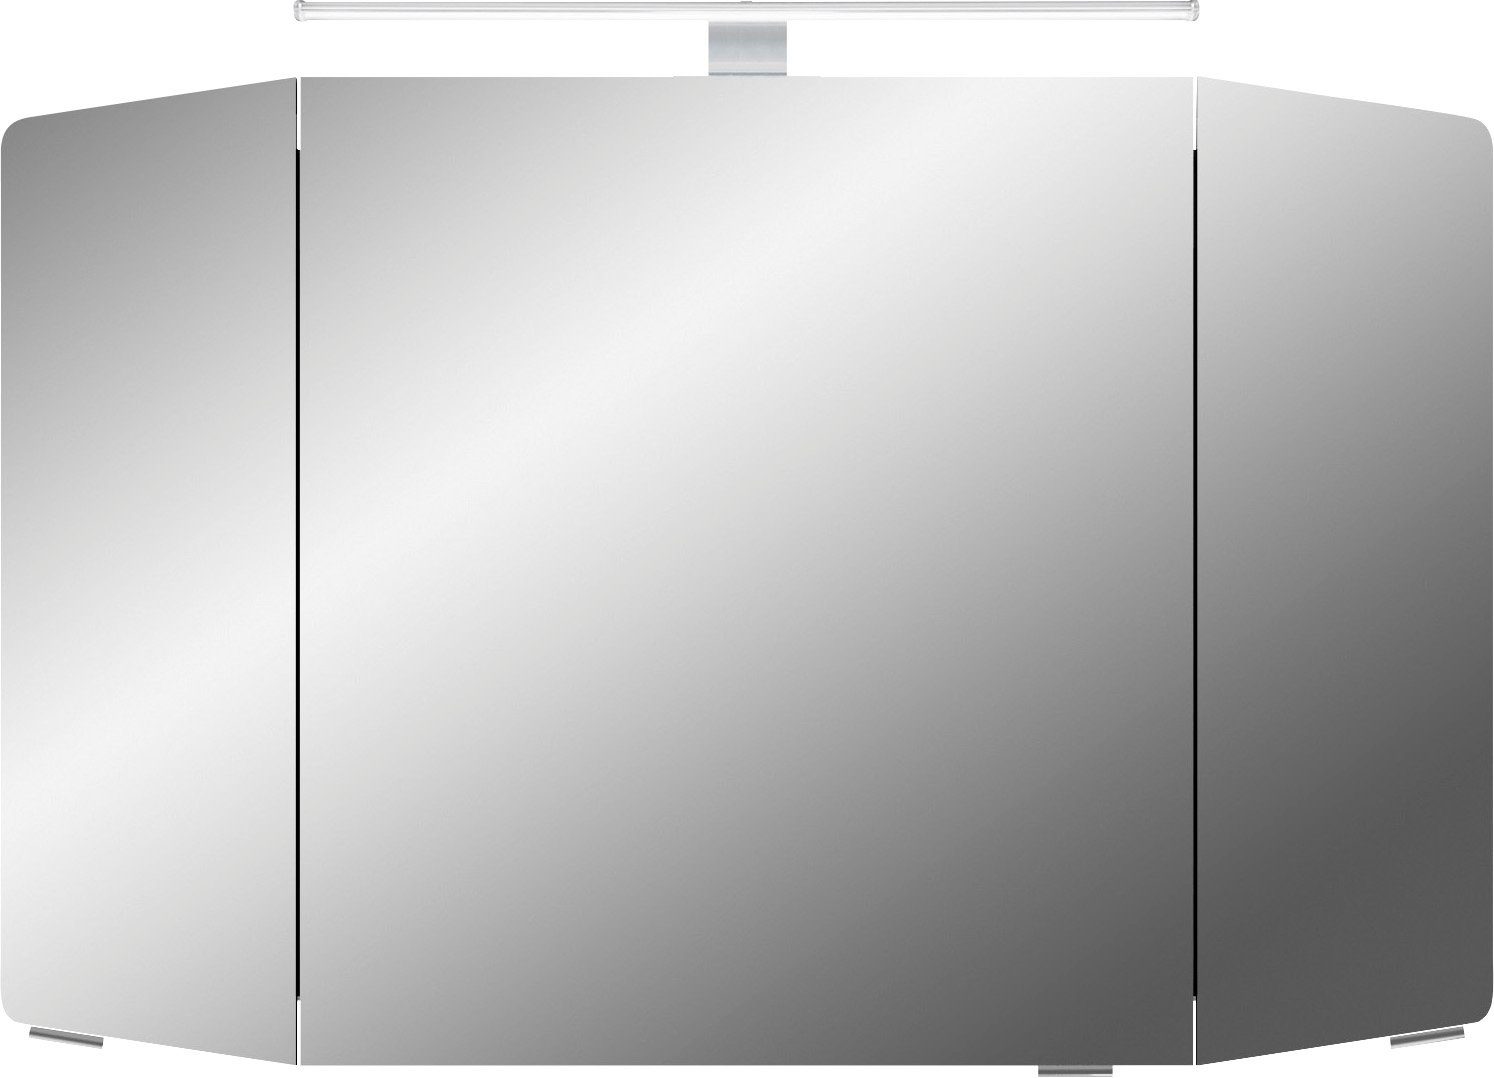 Saphir Spiegelkast Cassca Sprint badkamermeubel, 3 spiegeldeuren, 6 legplanken, 100 cm breed